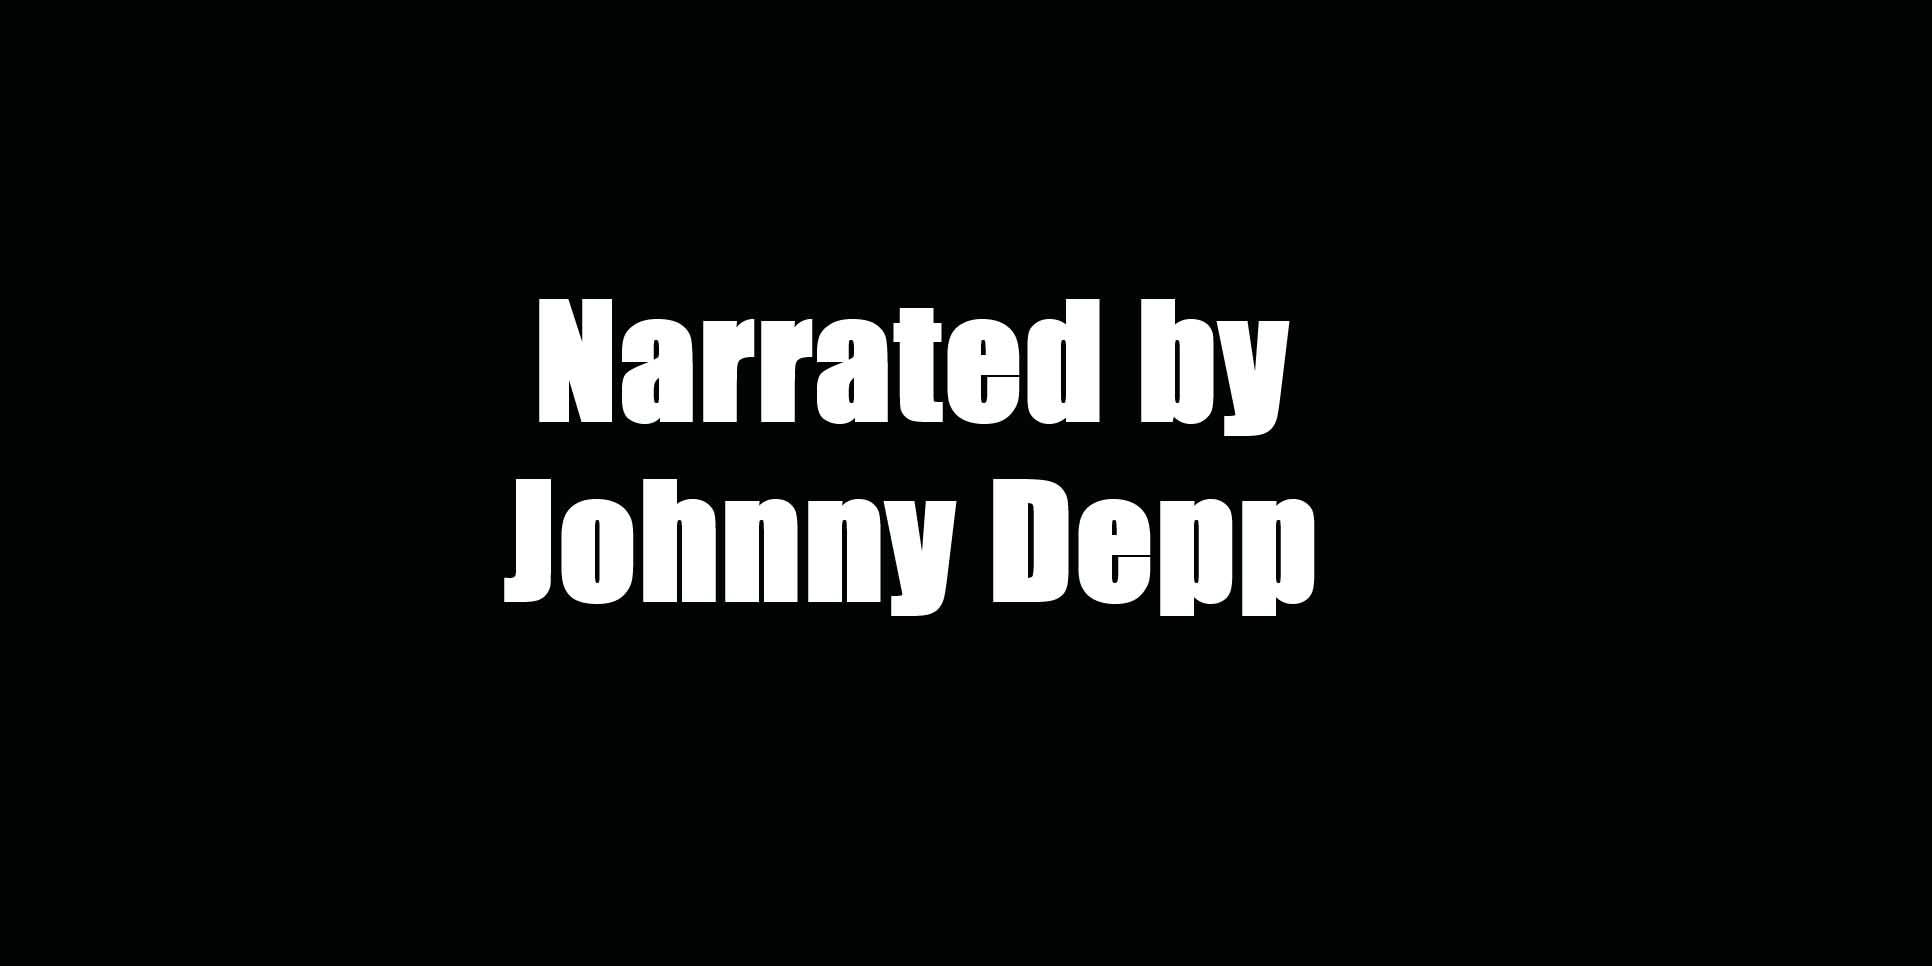 Johnny Depp’s credit